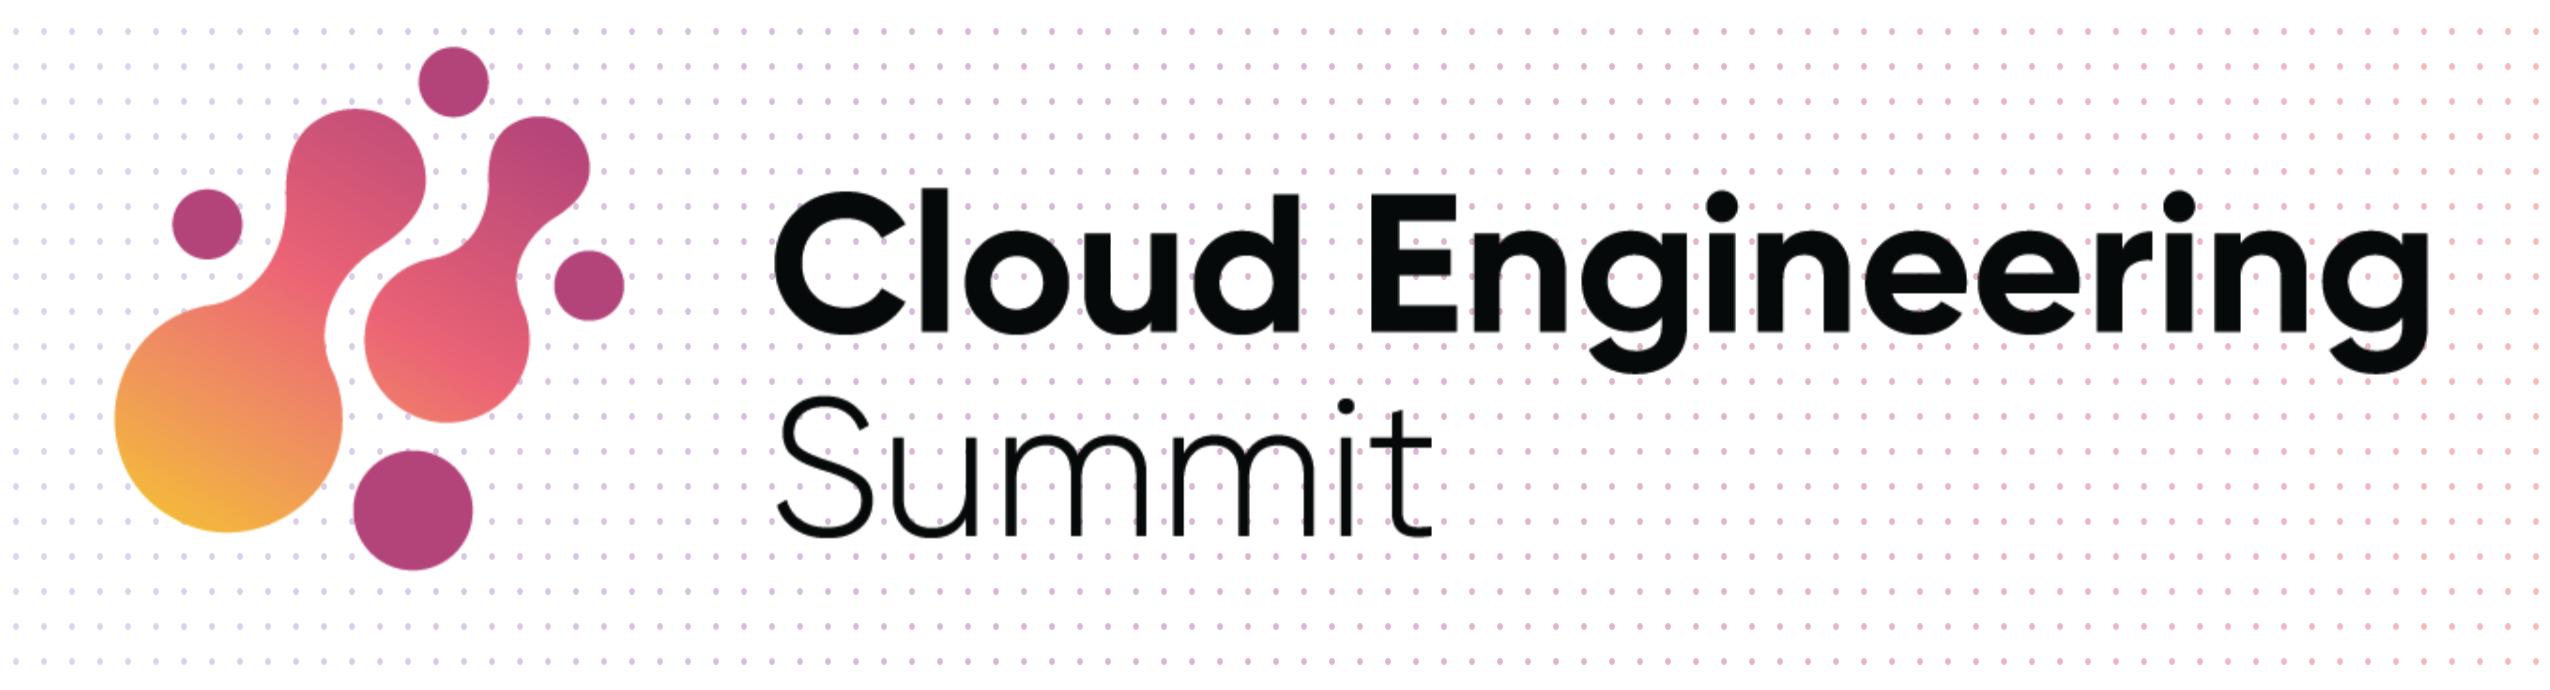 Cloud Engineering Summit Pulumi